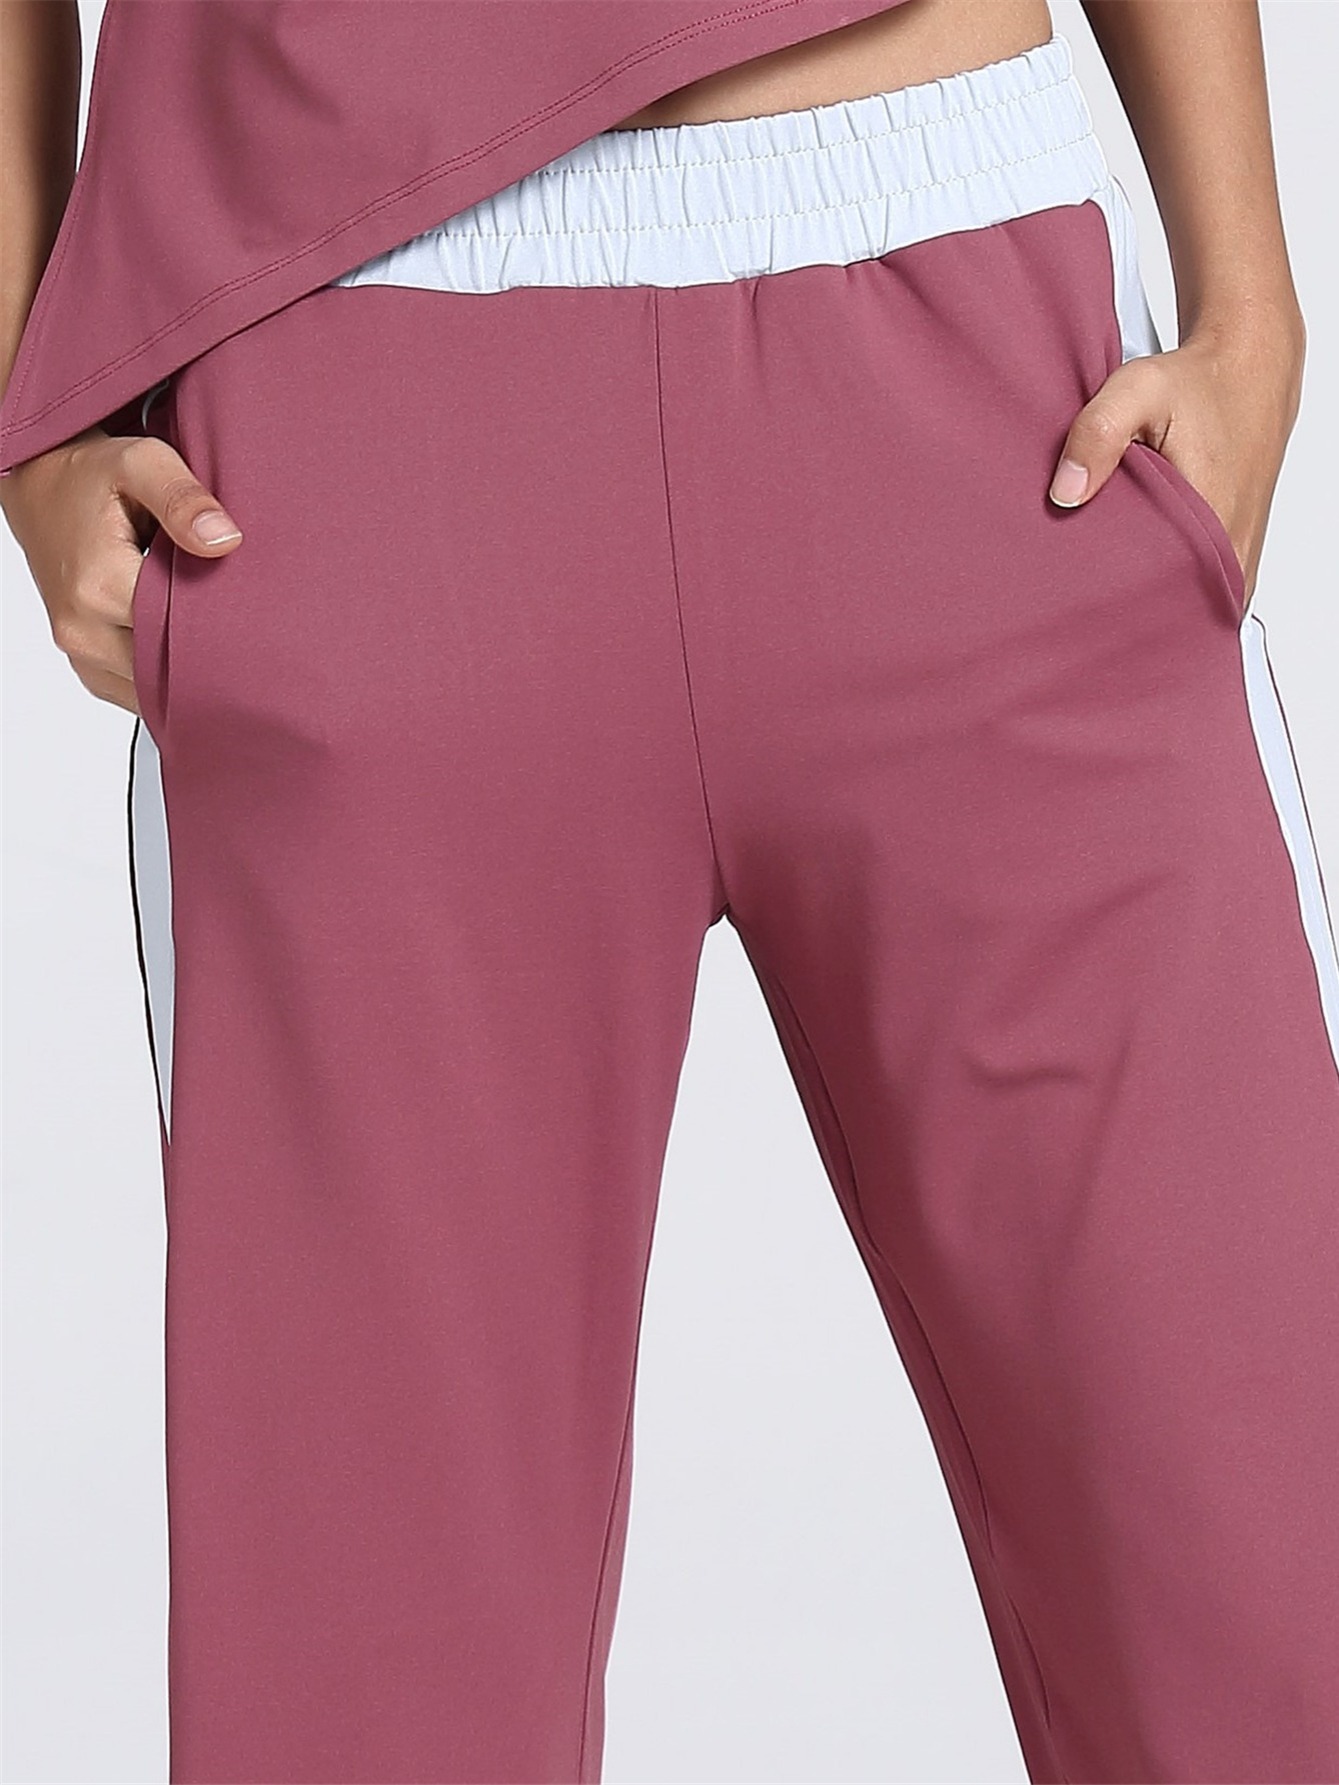 Cinch Bottom Sweatpants for Women Loose Fit Drawstring Plain